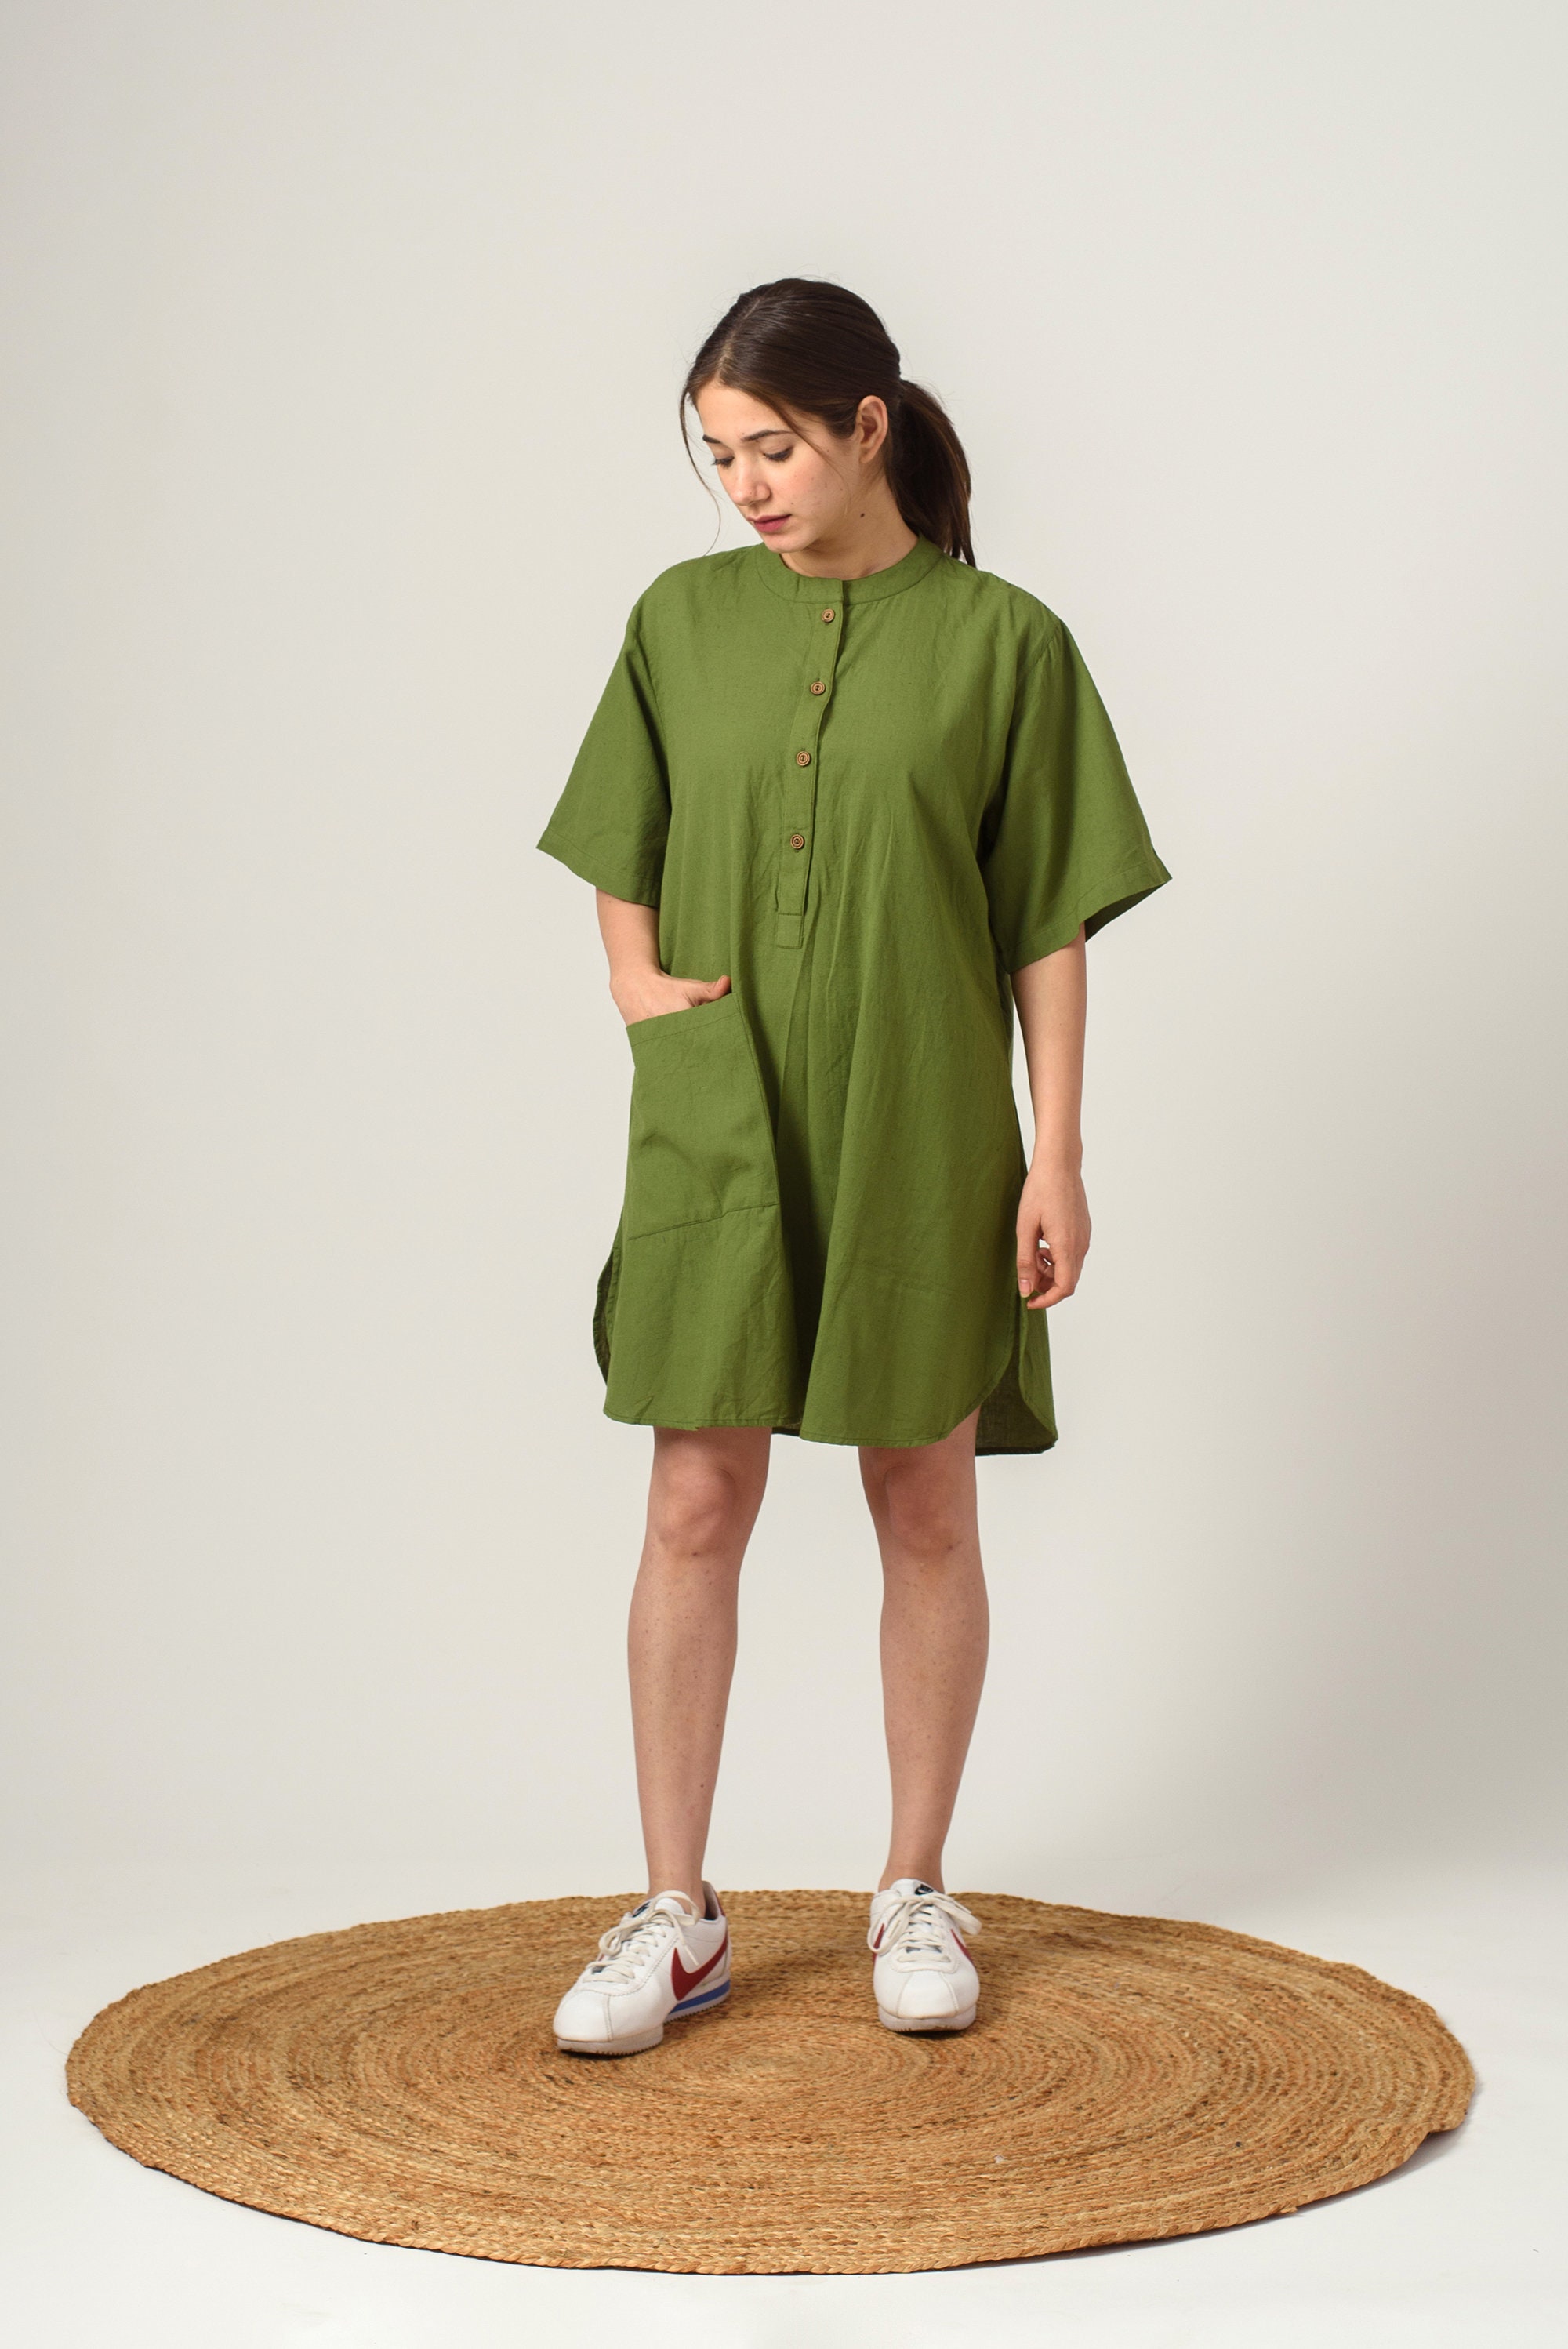 Buy Midi Shirt Dress Online In India -  India